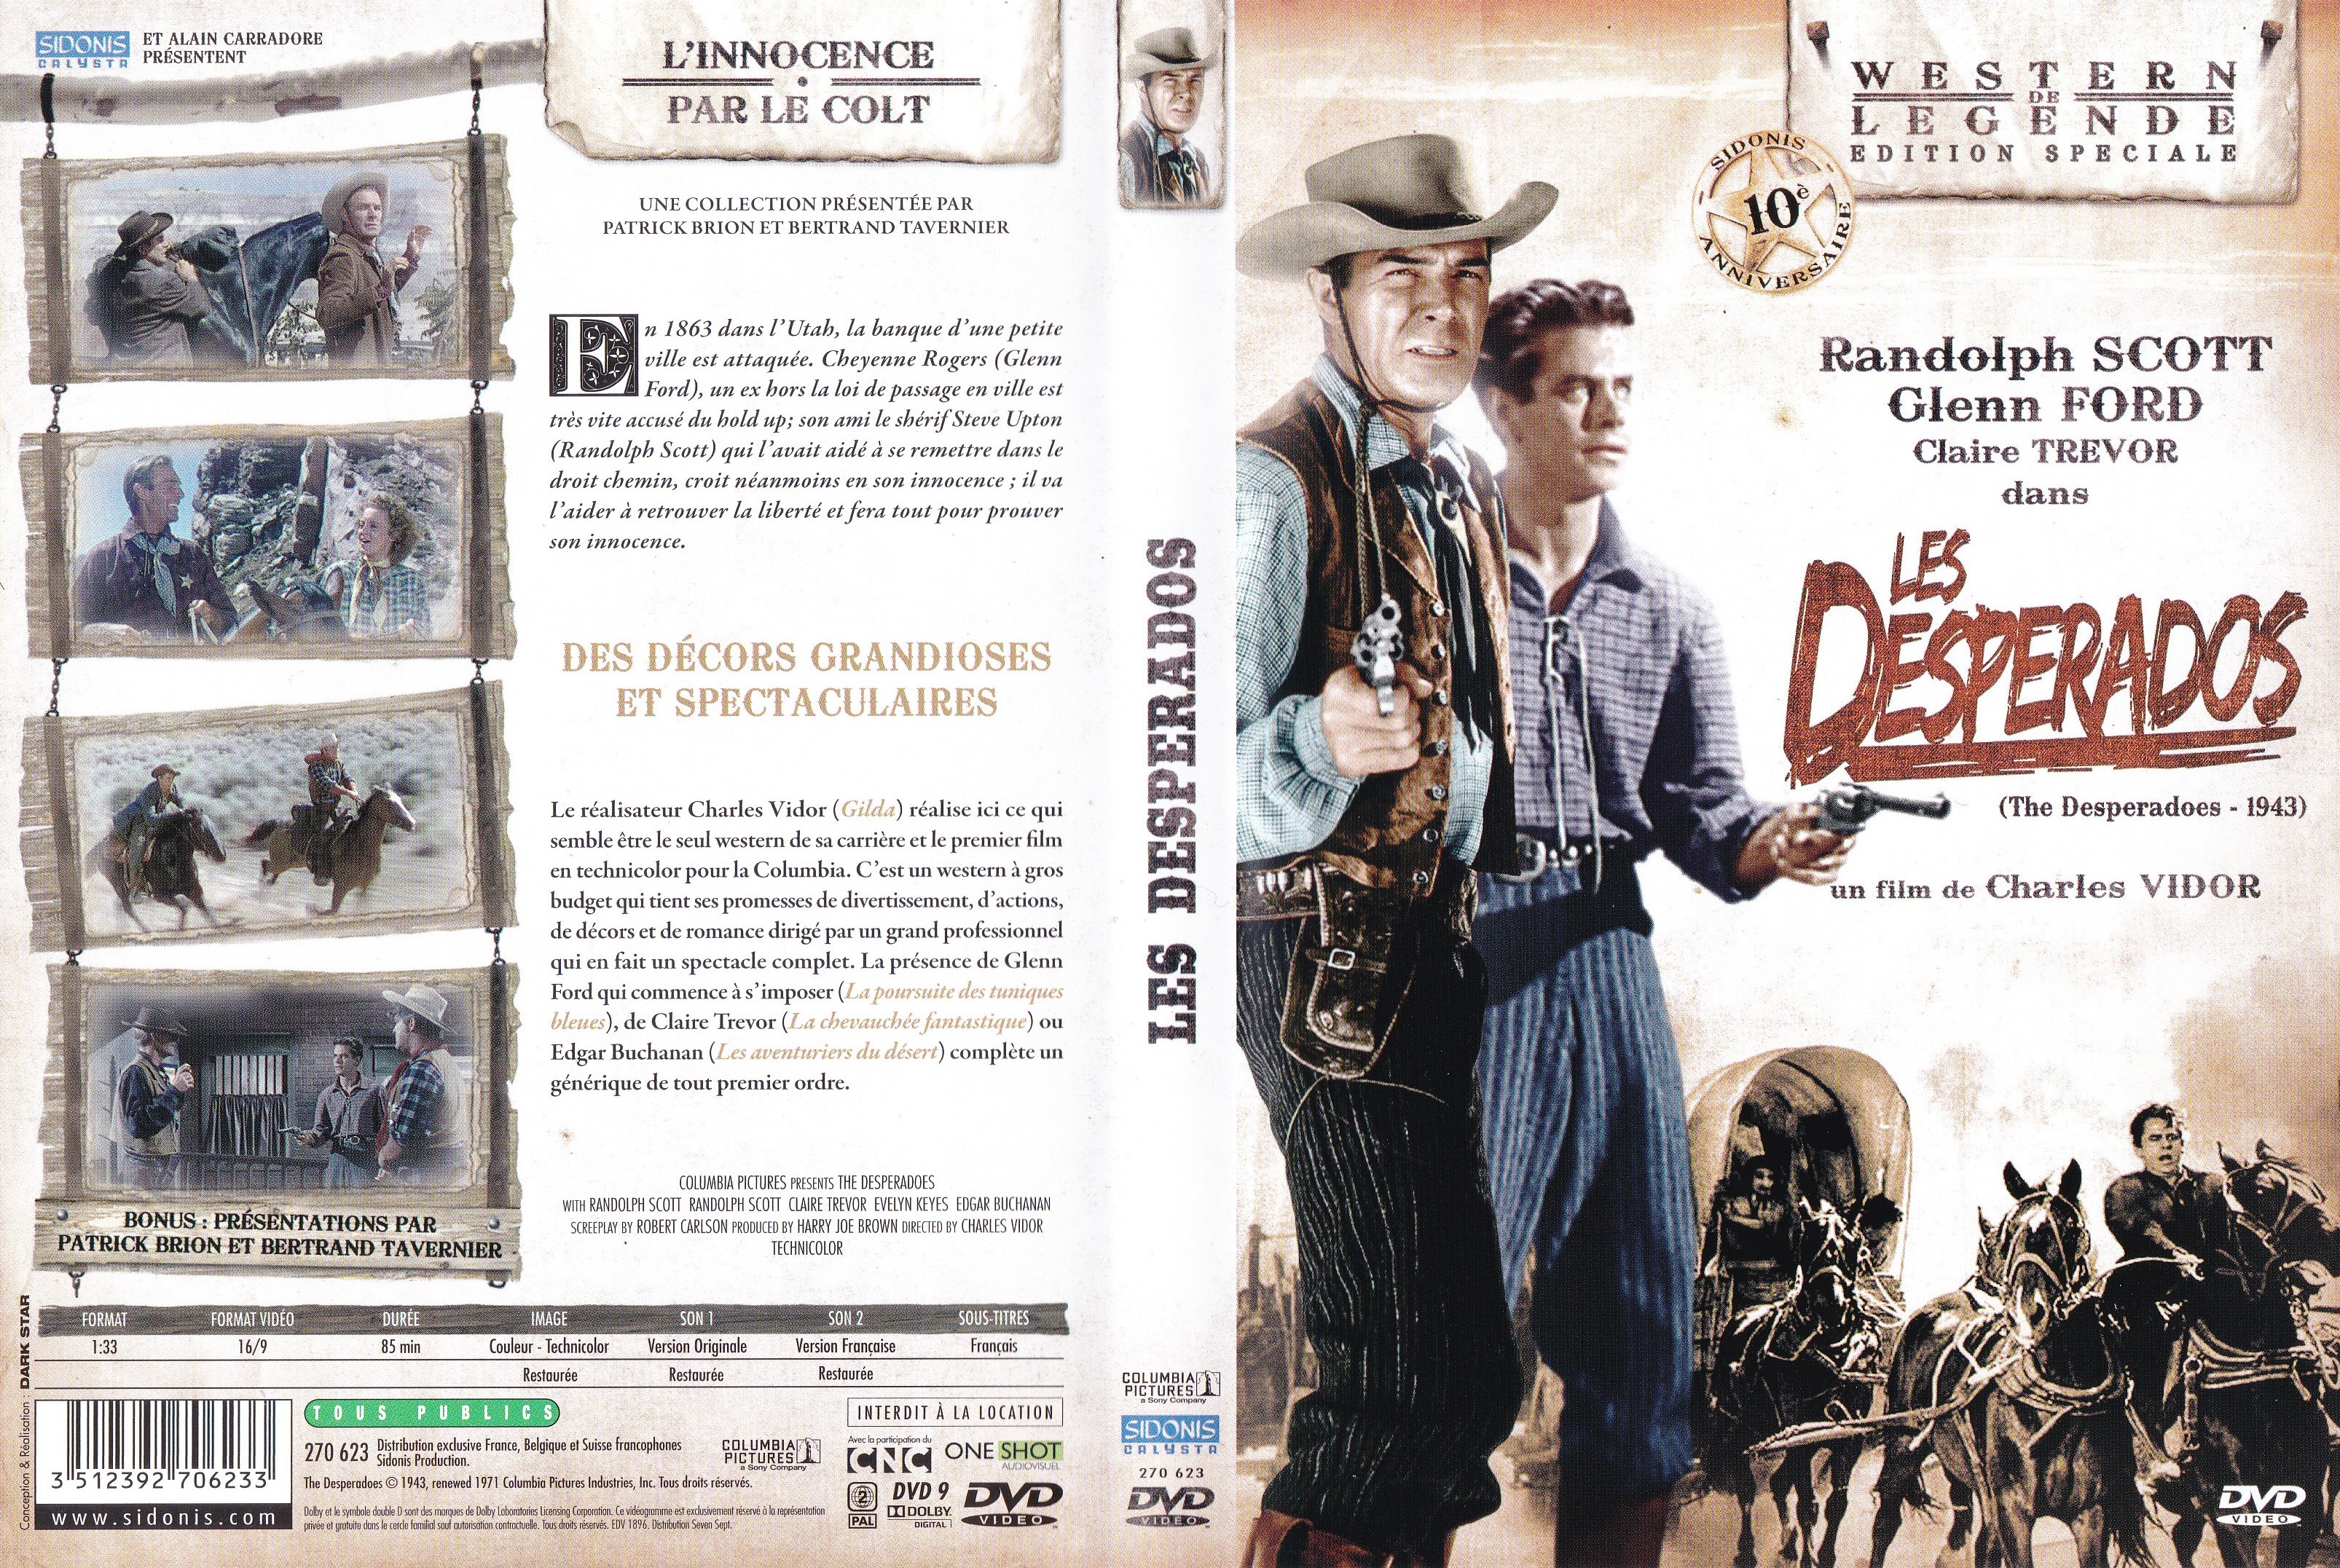 Jaquette DVD Les desperados